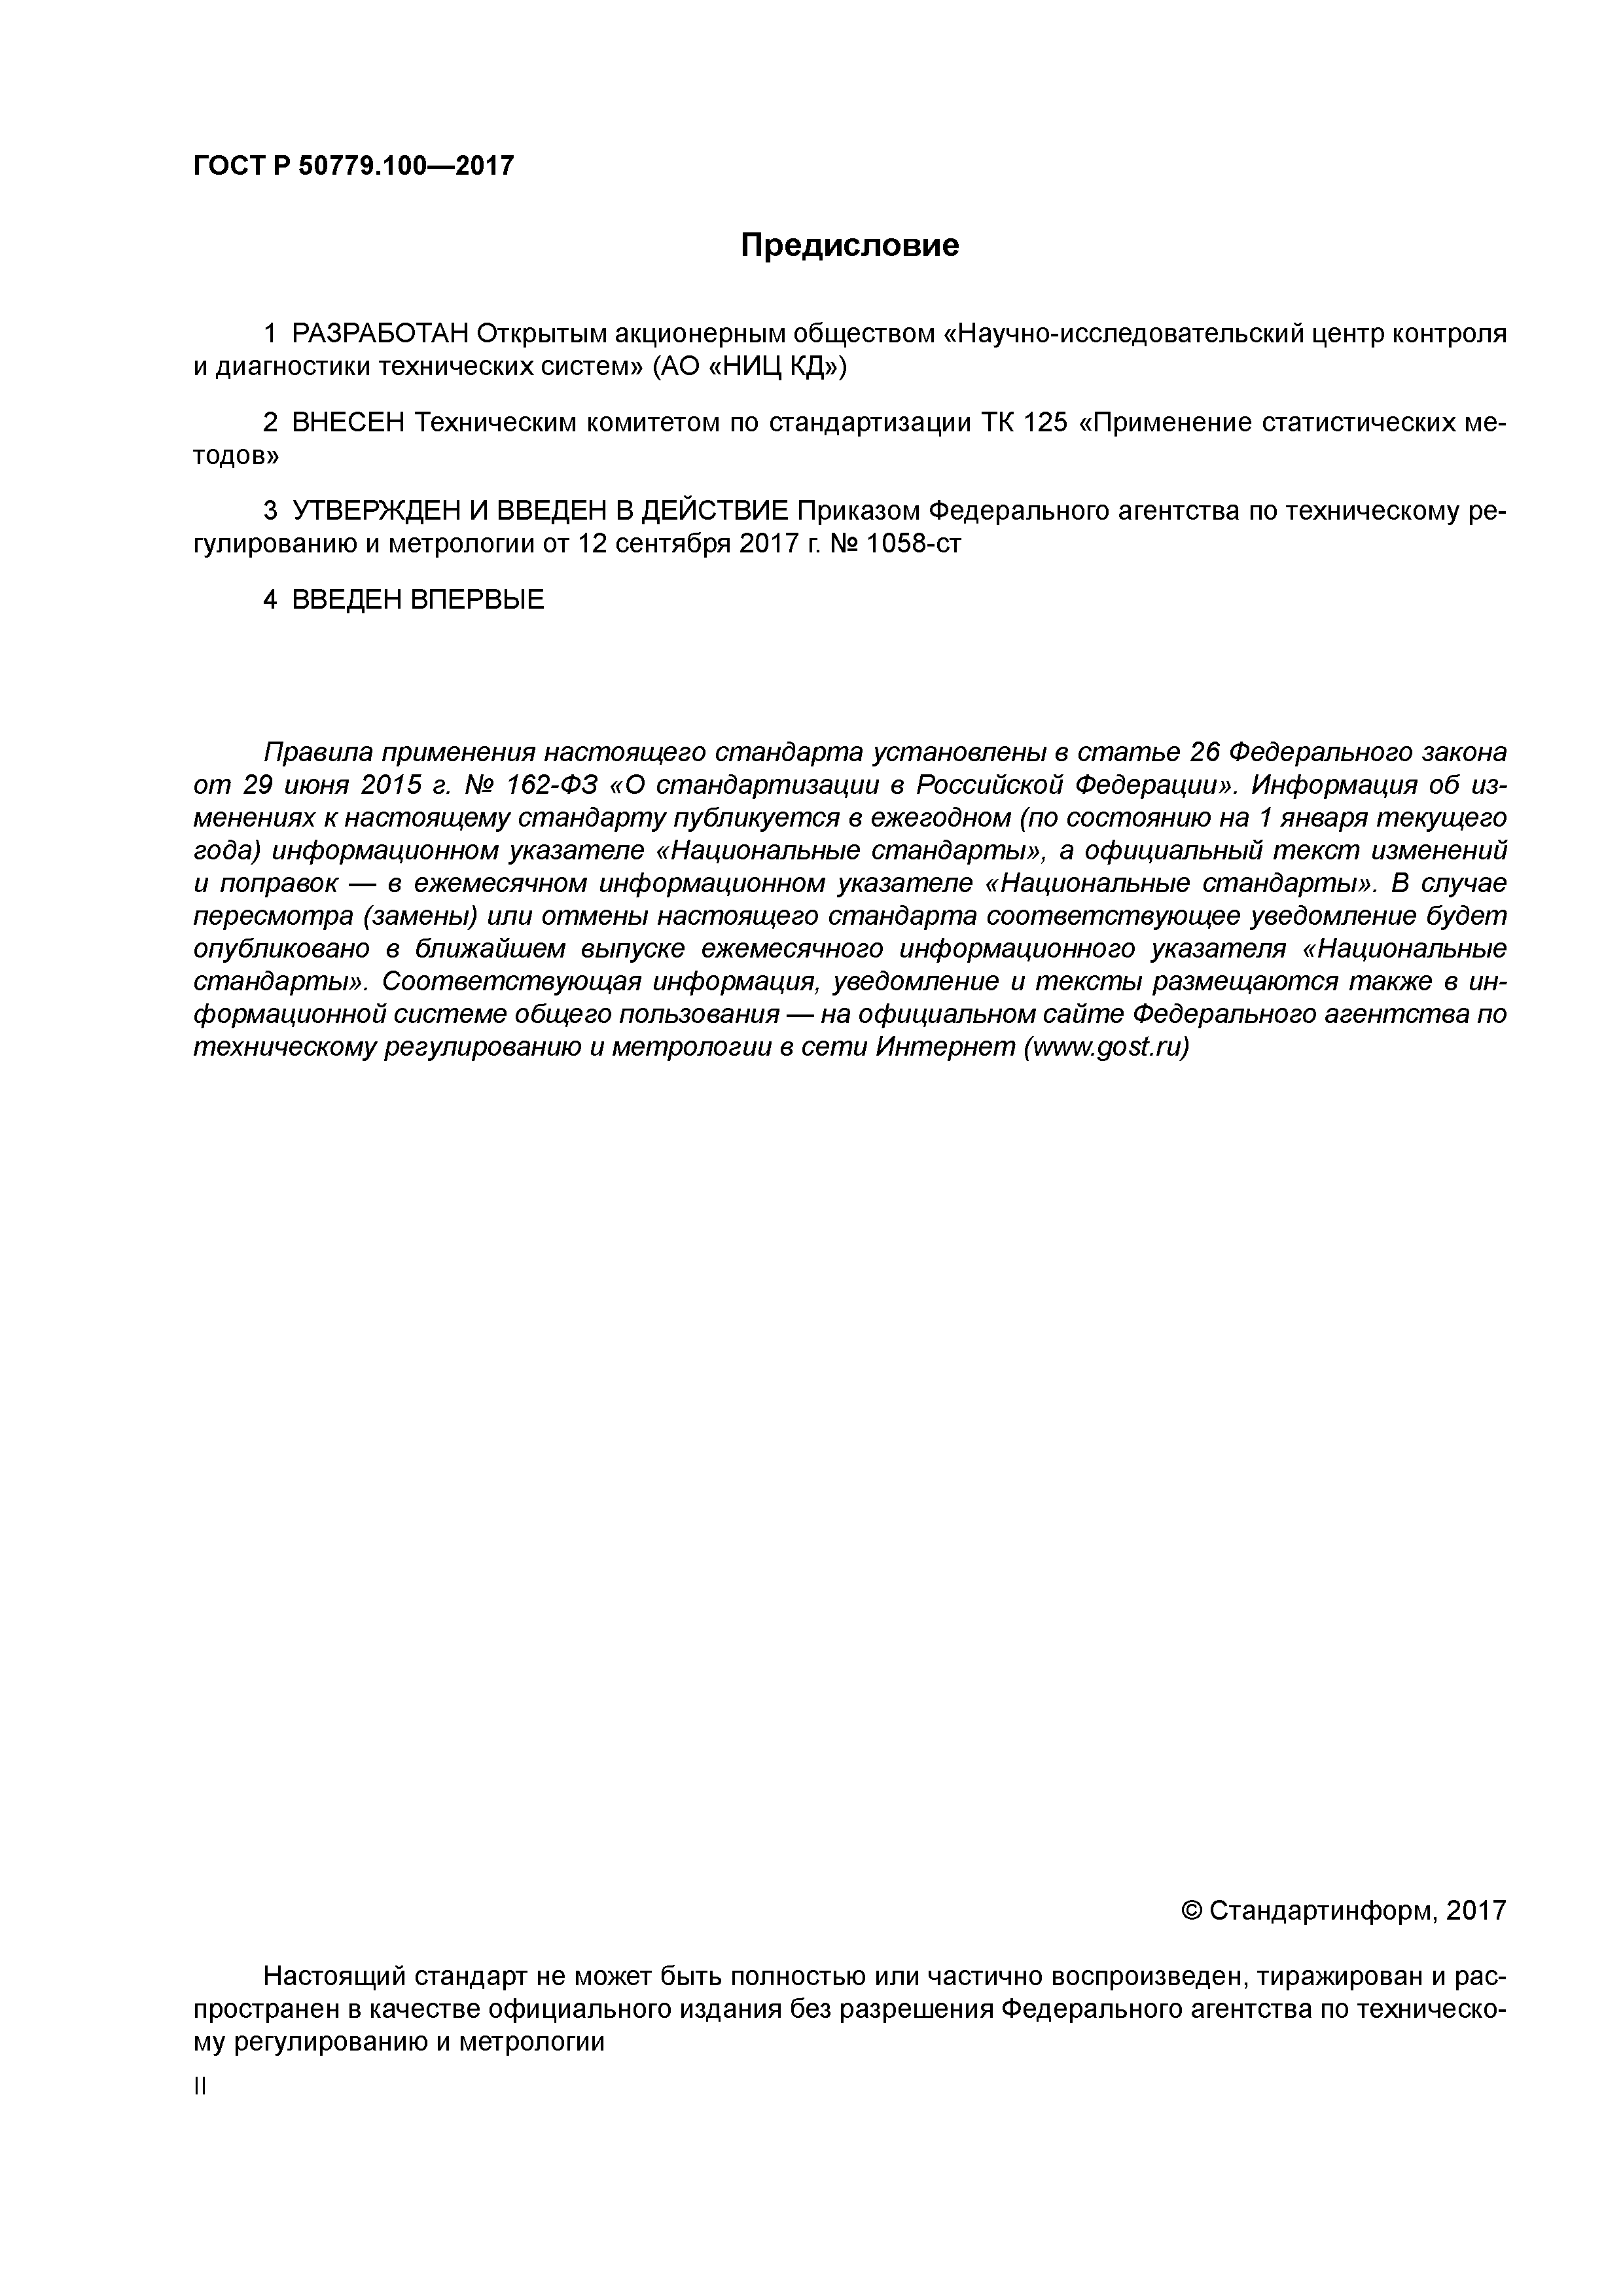 ГОСТ Р 50779.100-2017